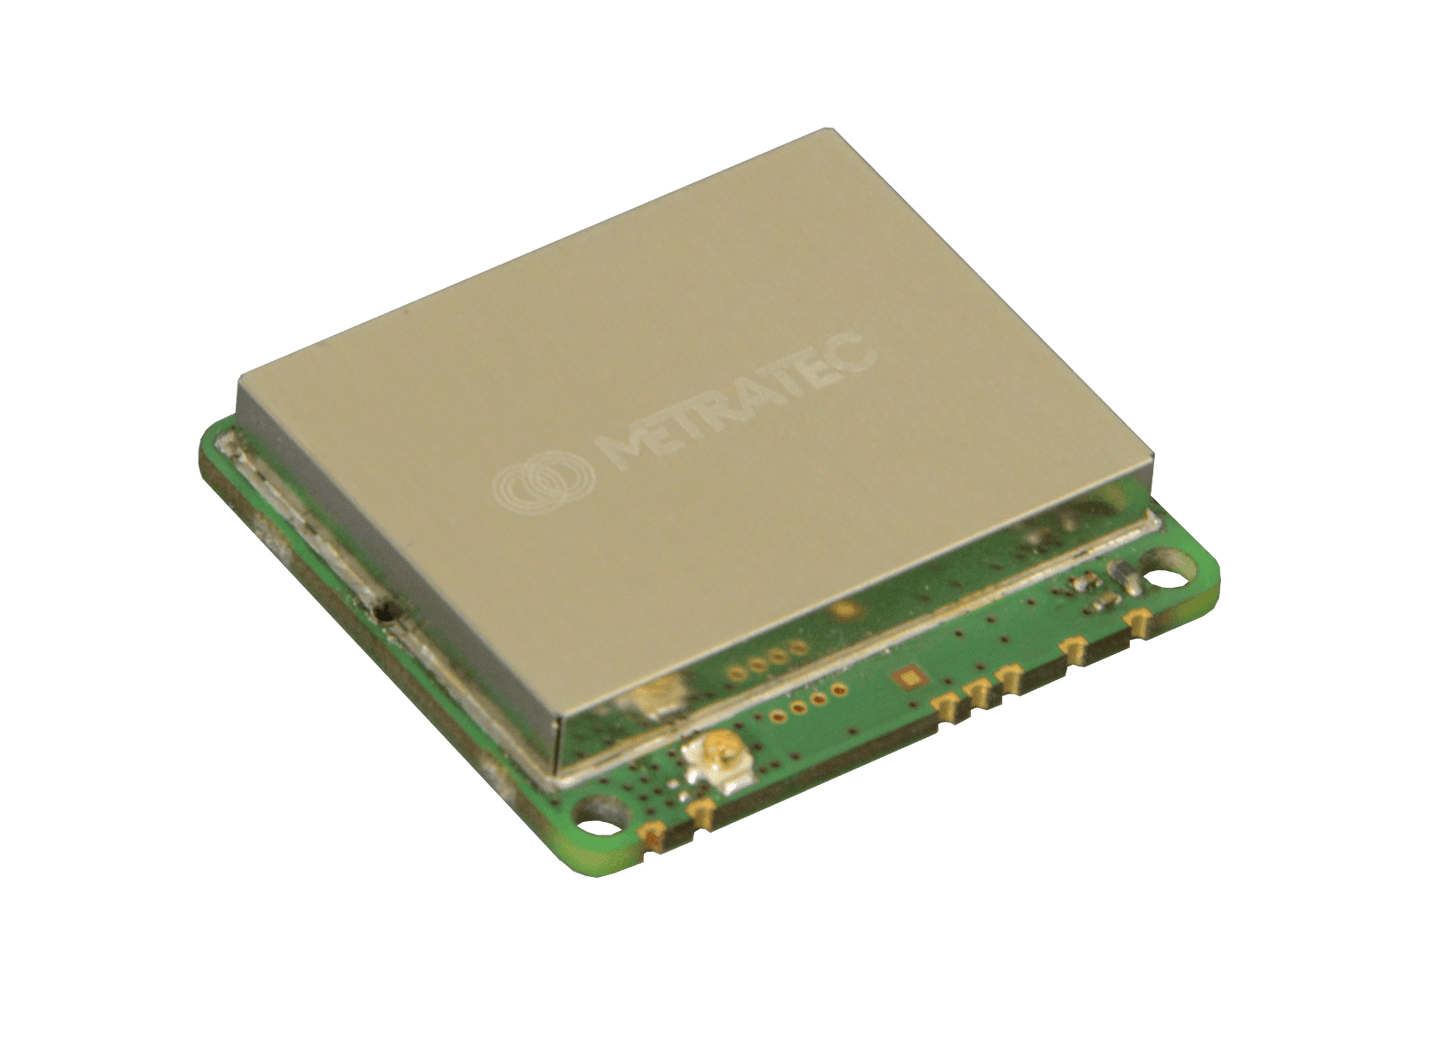 DwarfG2-Mini v2 UHF RFID OEM Module